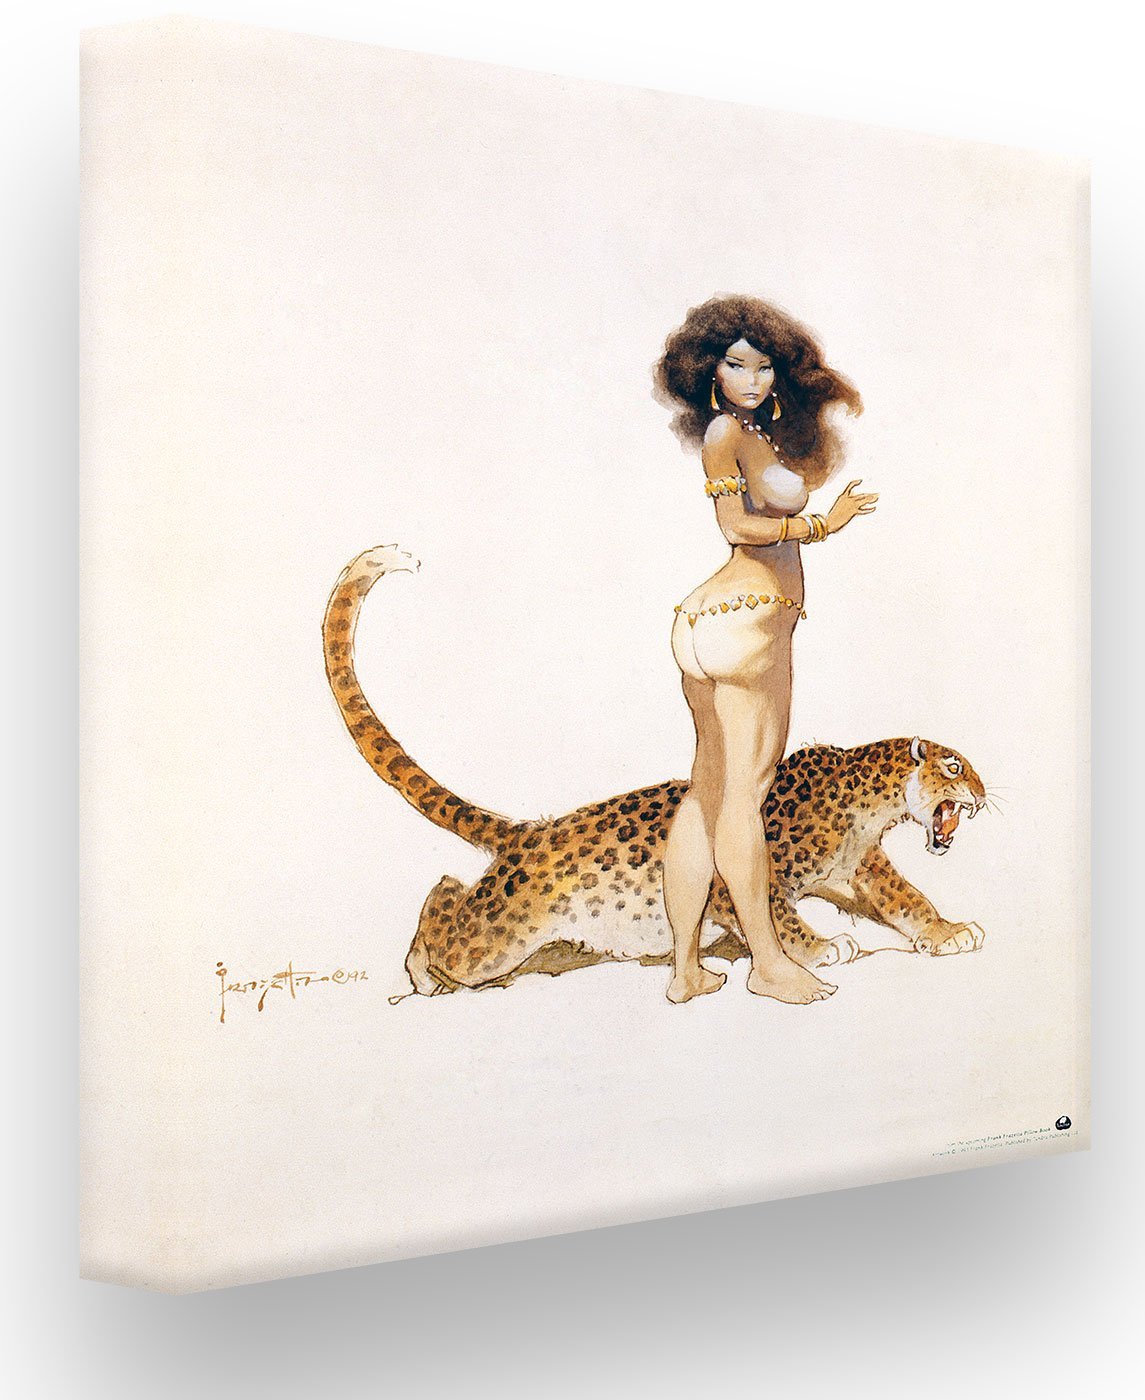 FrazettaGirls Art Print Canvas / Stretched on wooden bar / 18x24 Girl with Leopard Print